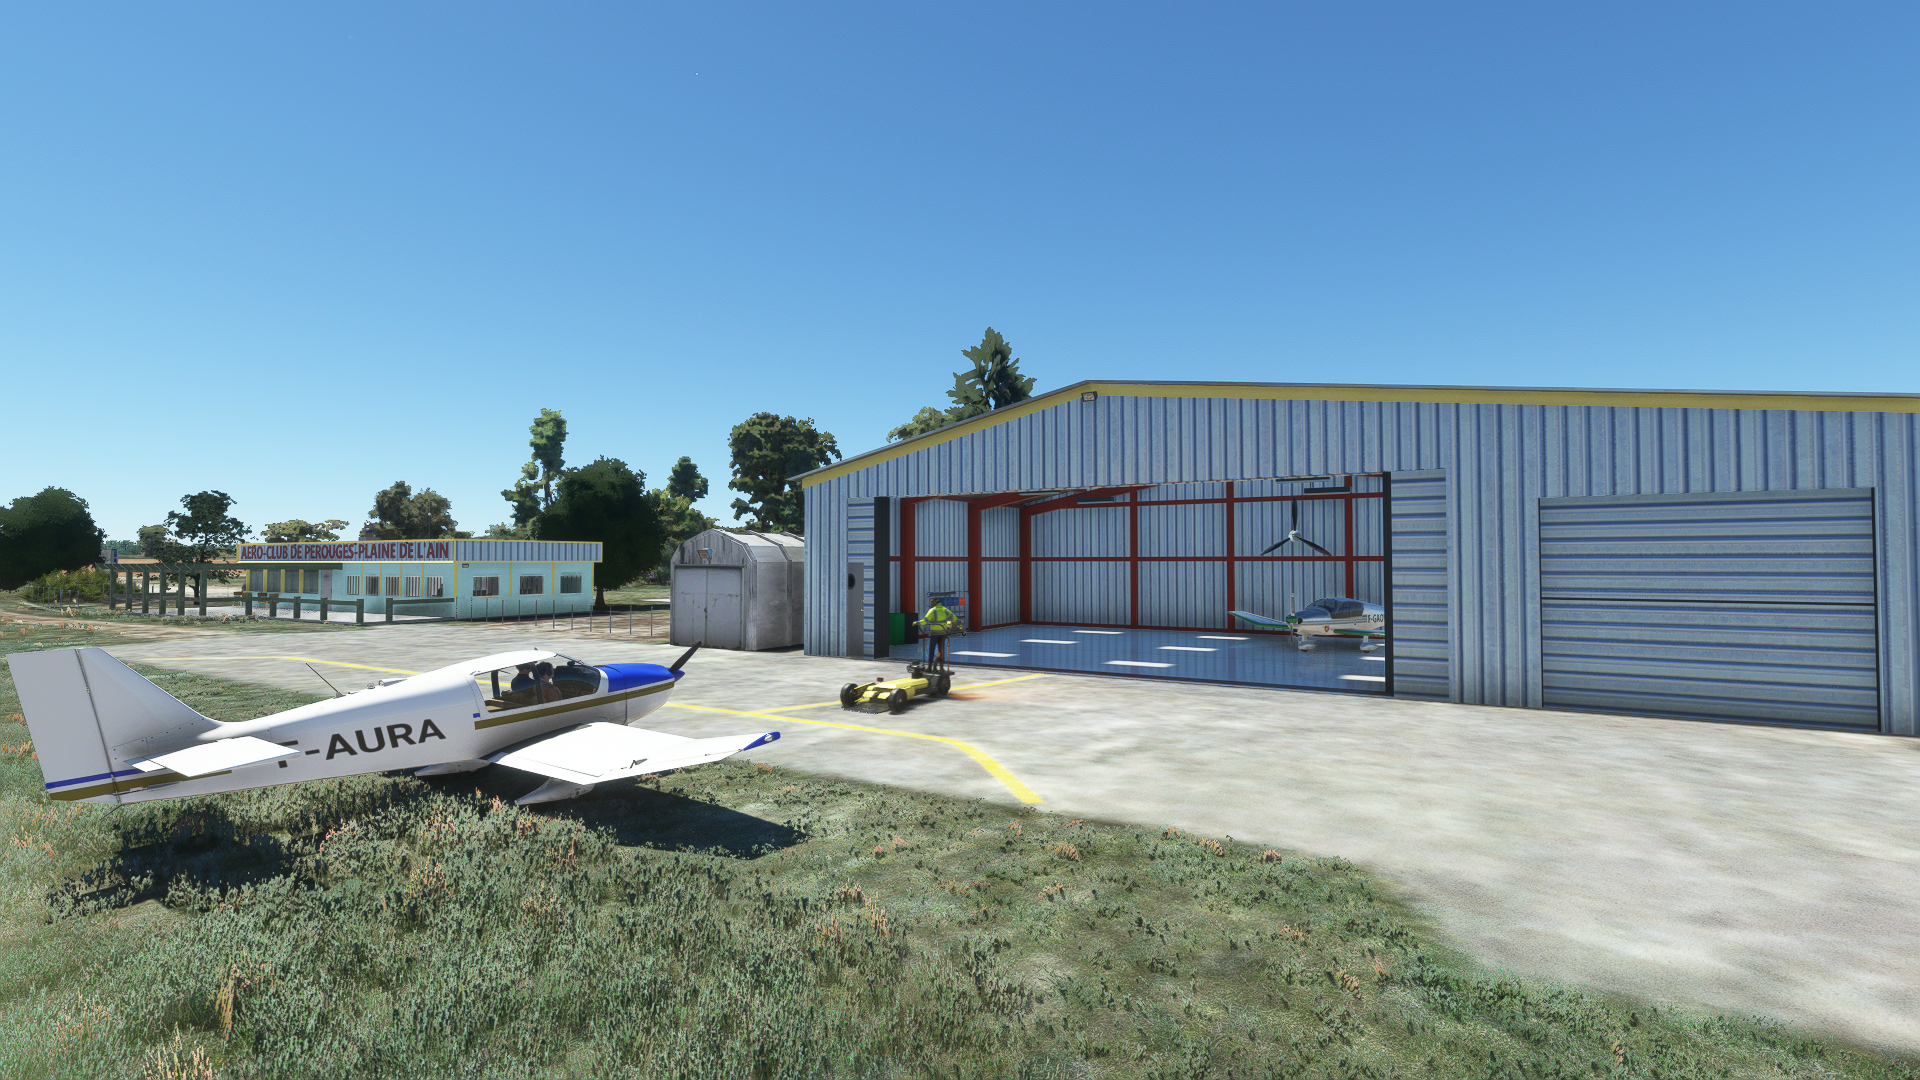 Lfhc pushback hangar aeroclub